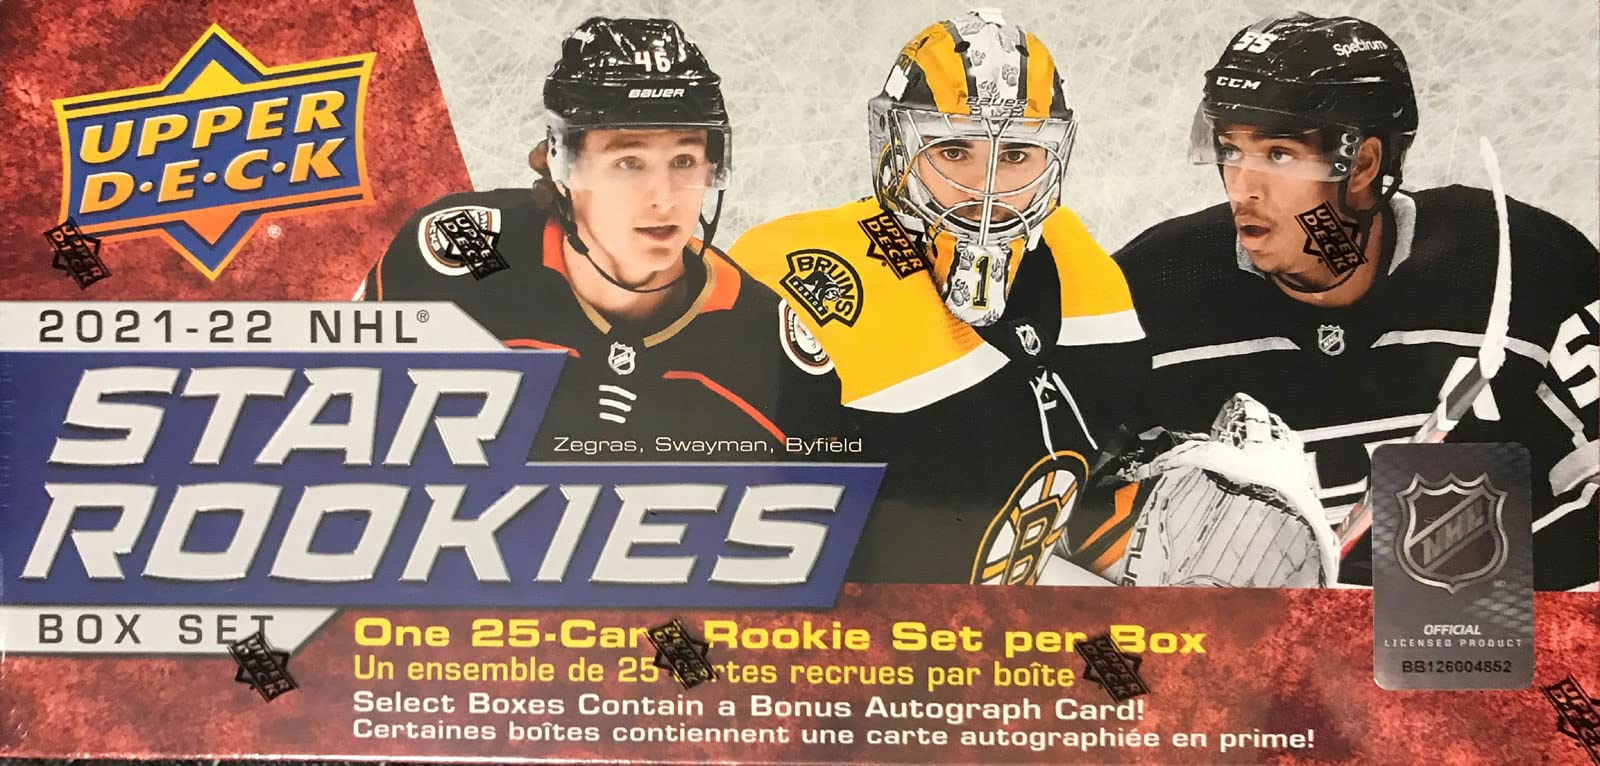 Upper Deck 2021/22 NHL Star Rookies Box Set Hockey Hobby Box